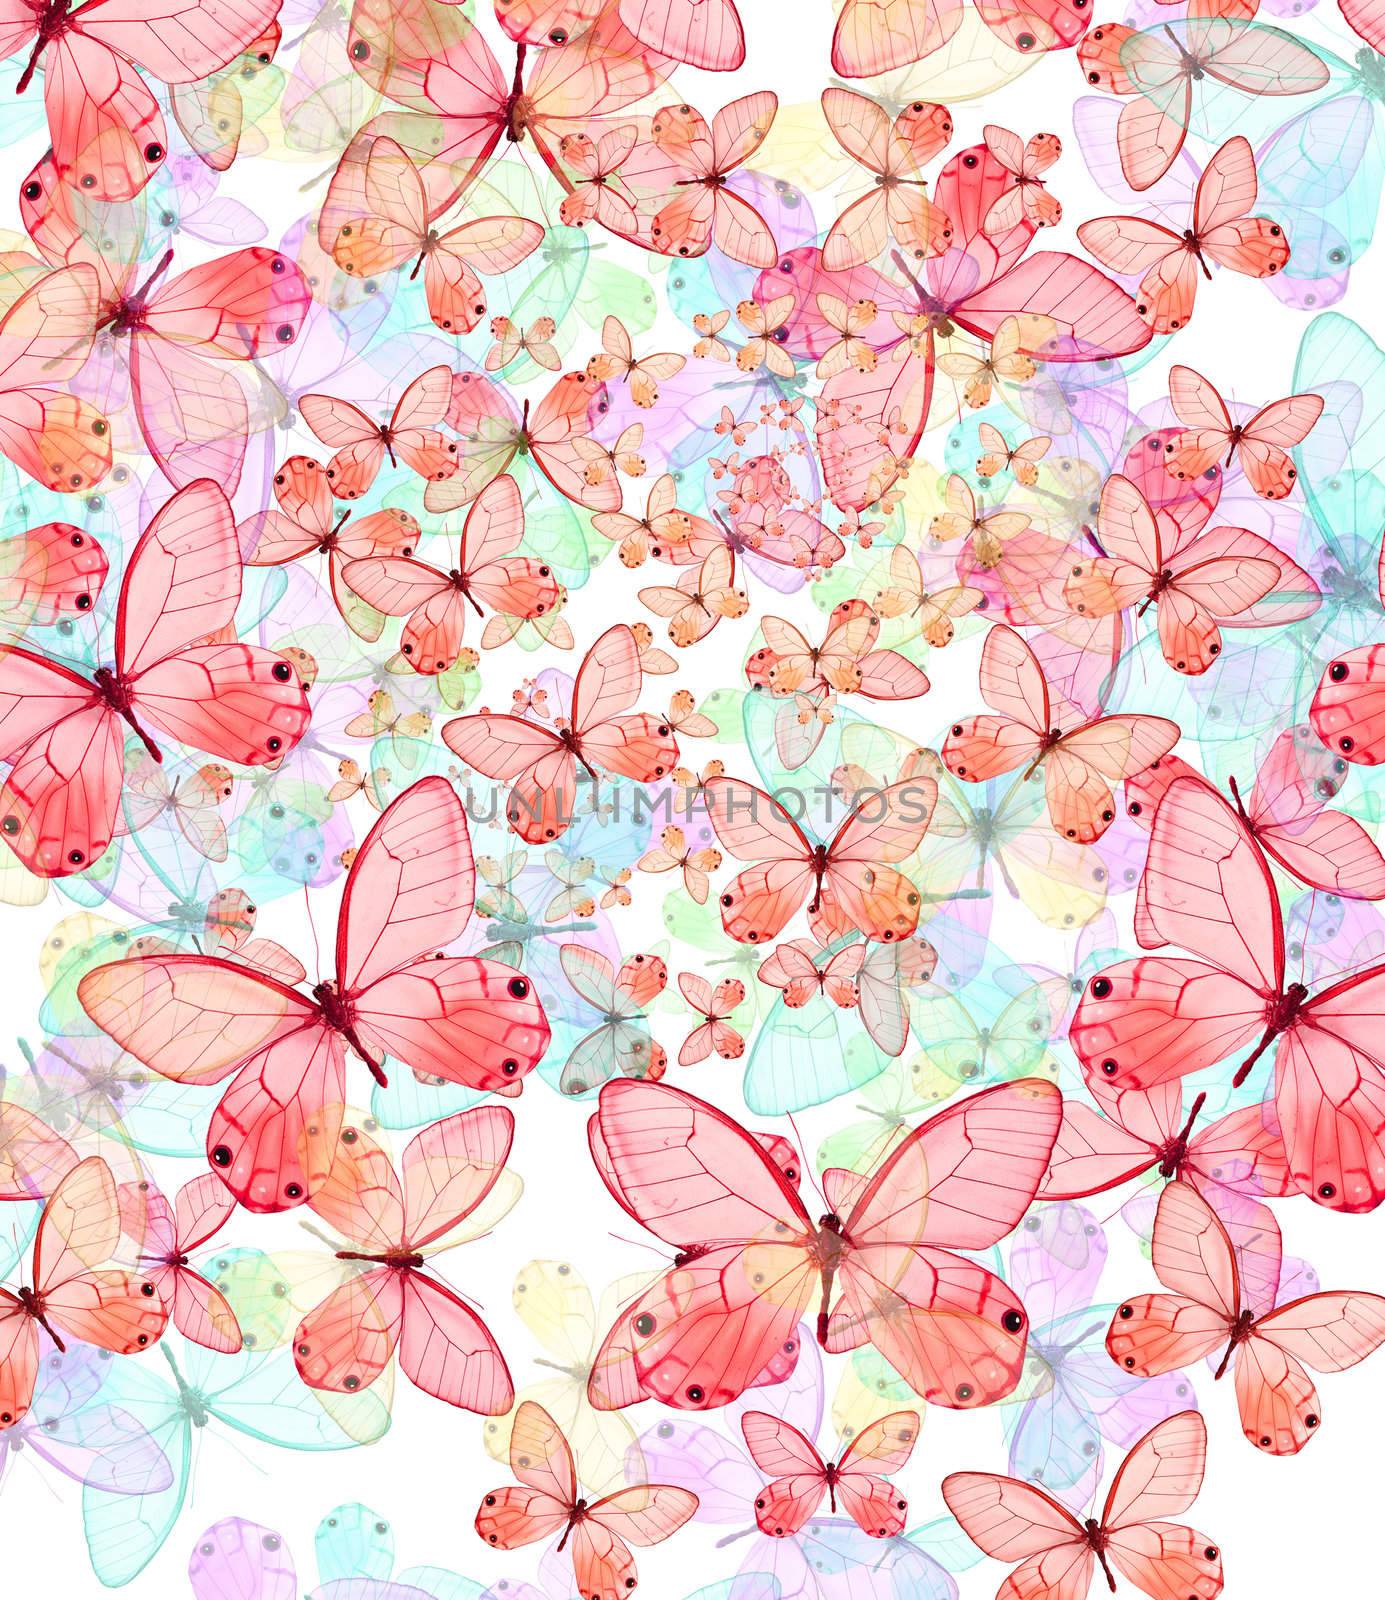 butterfly by Yellowj